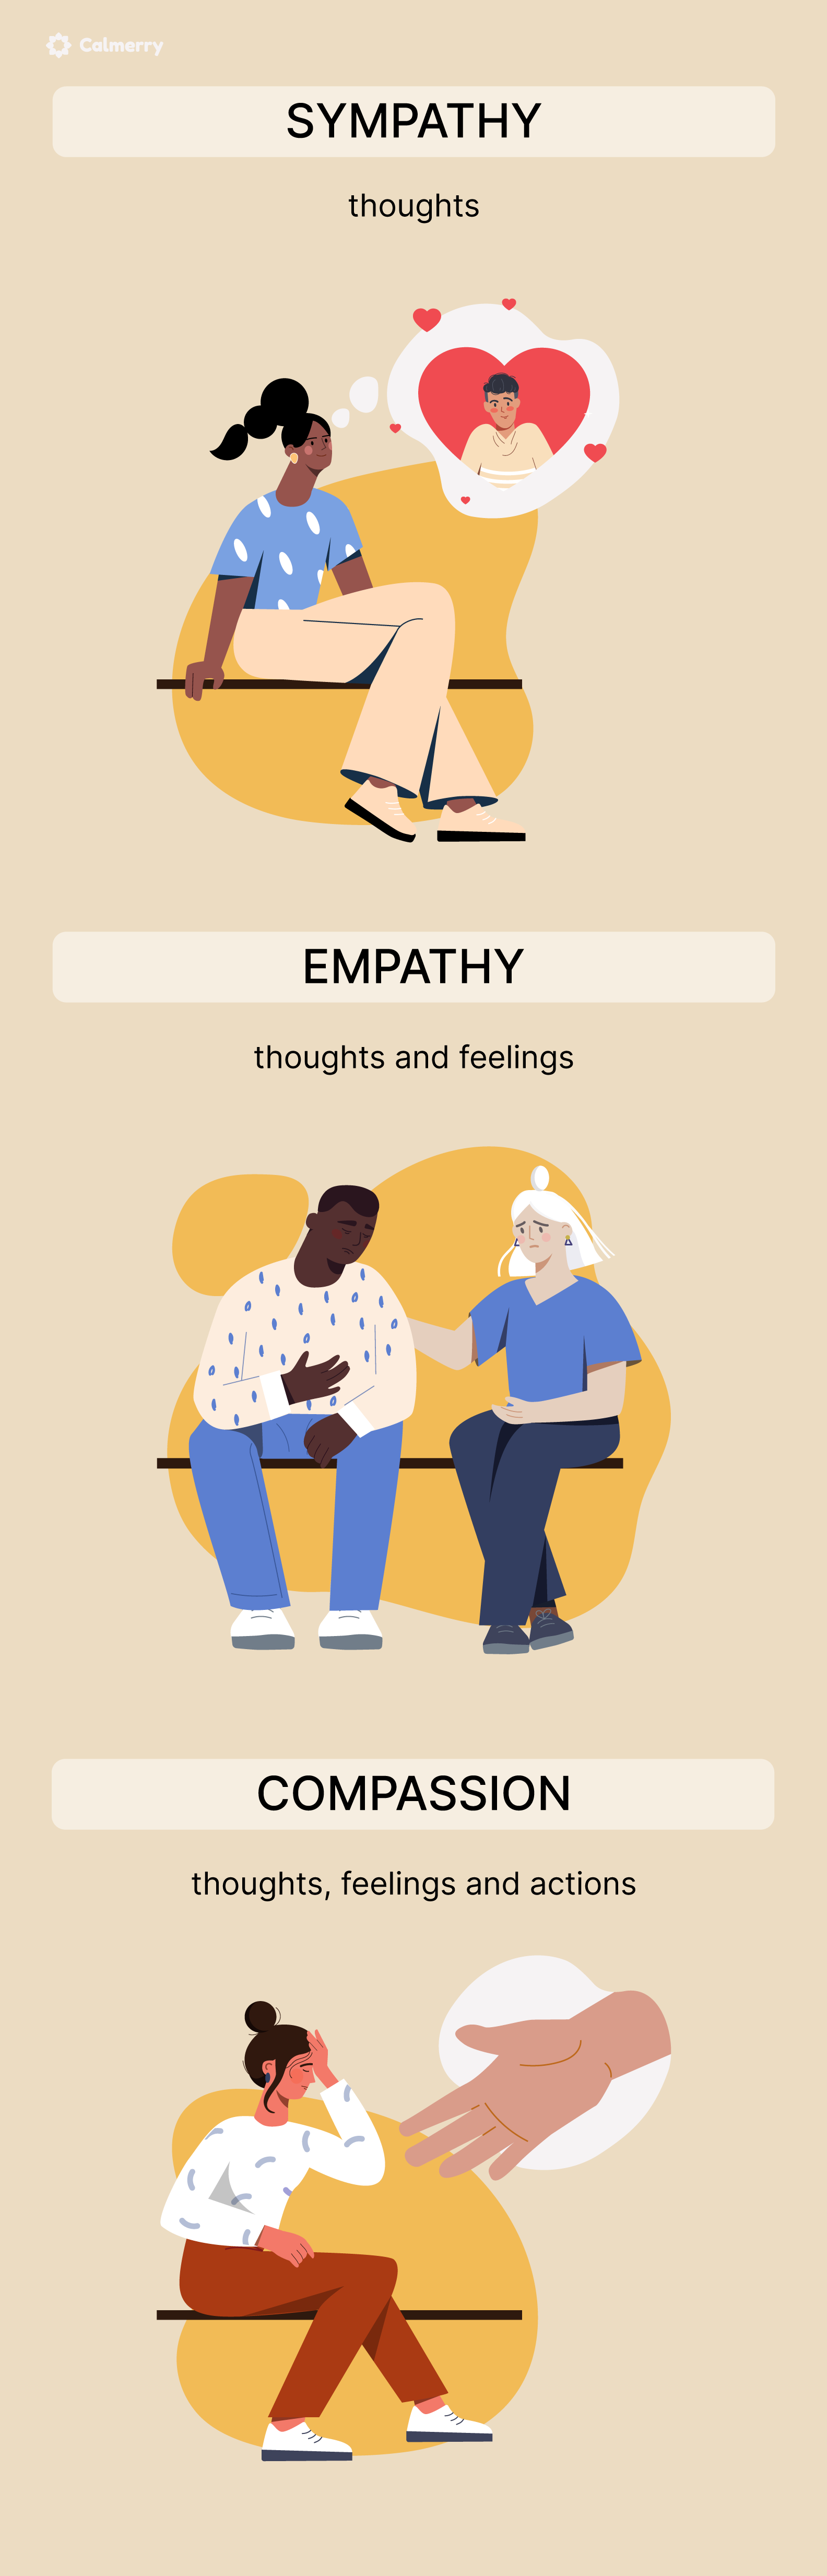 sympathy vs empathy vs compassion